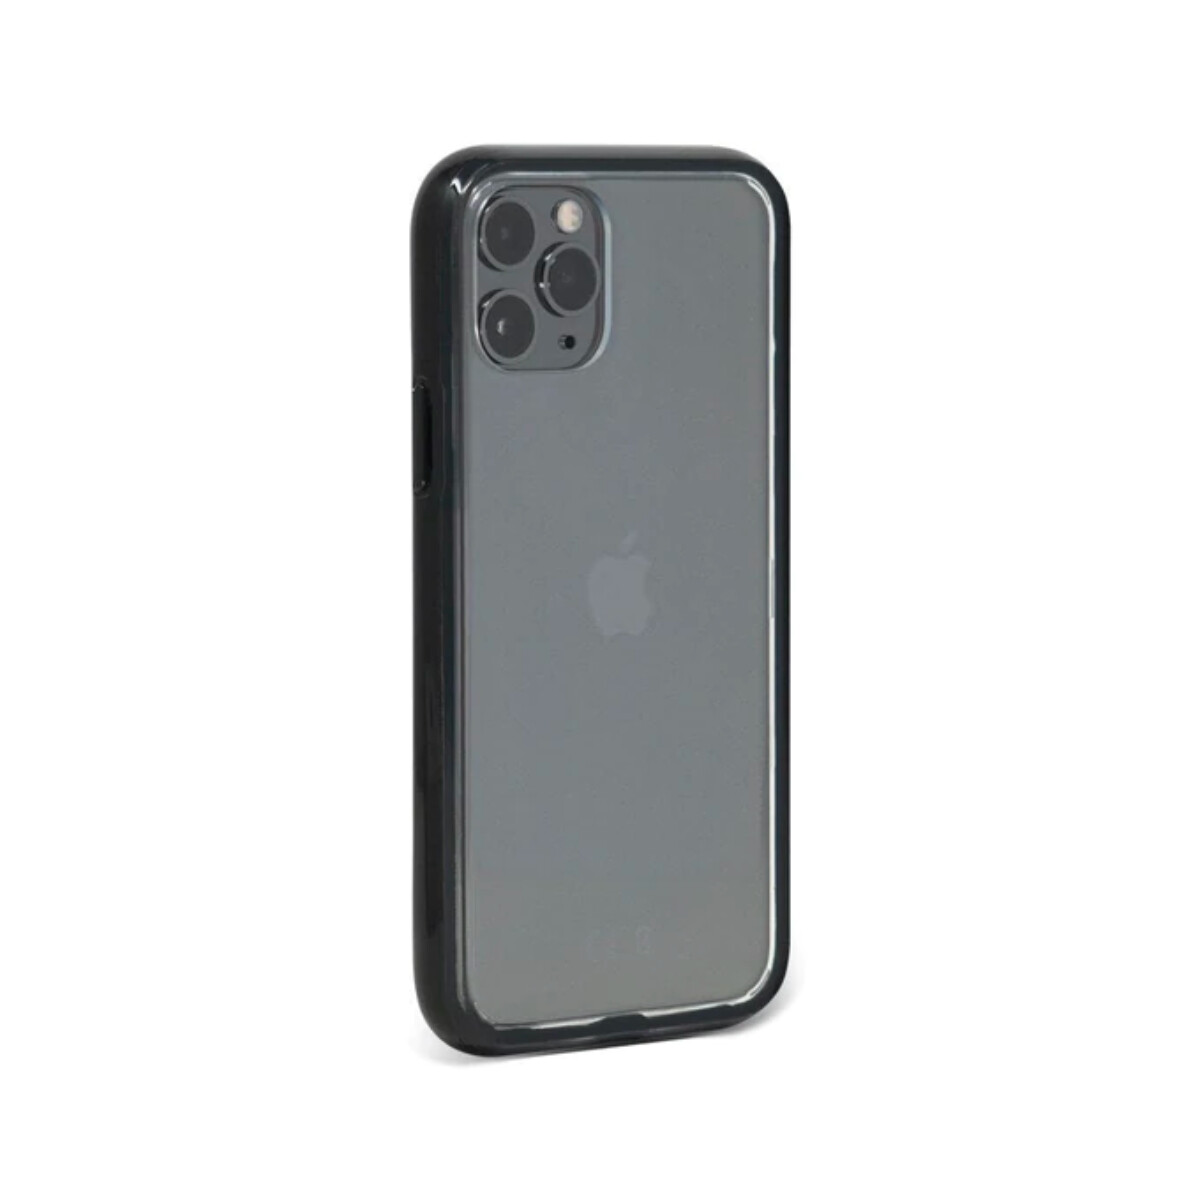 Mous case clarity iphone 11 pro - Mous case clarity iphone 11 pro clear 